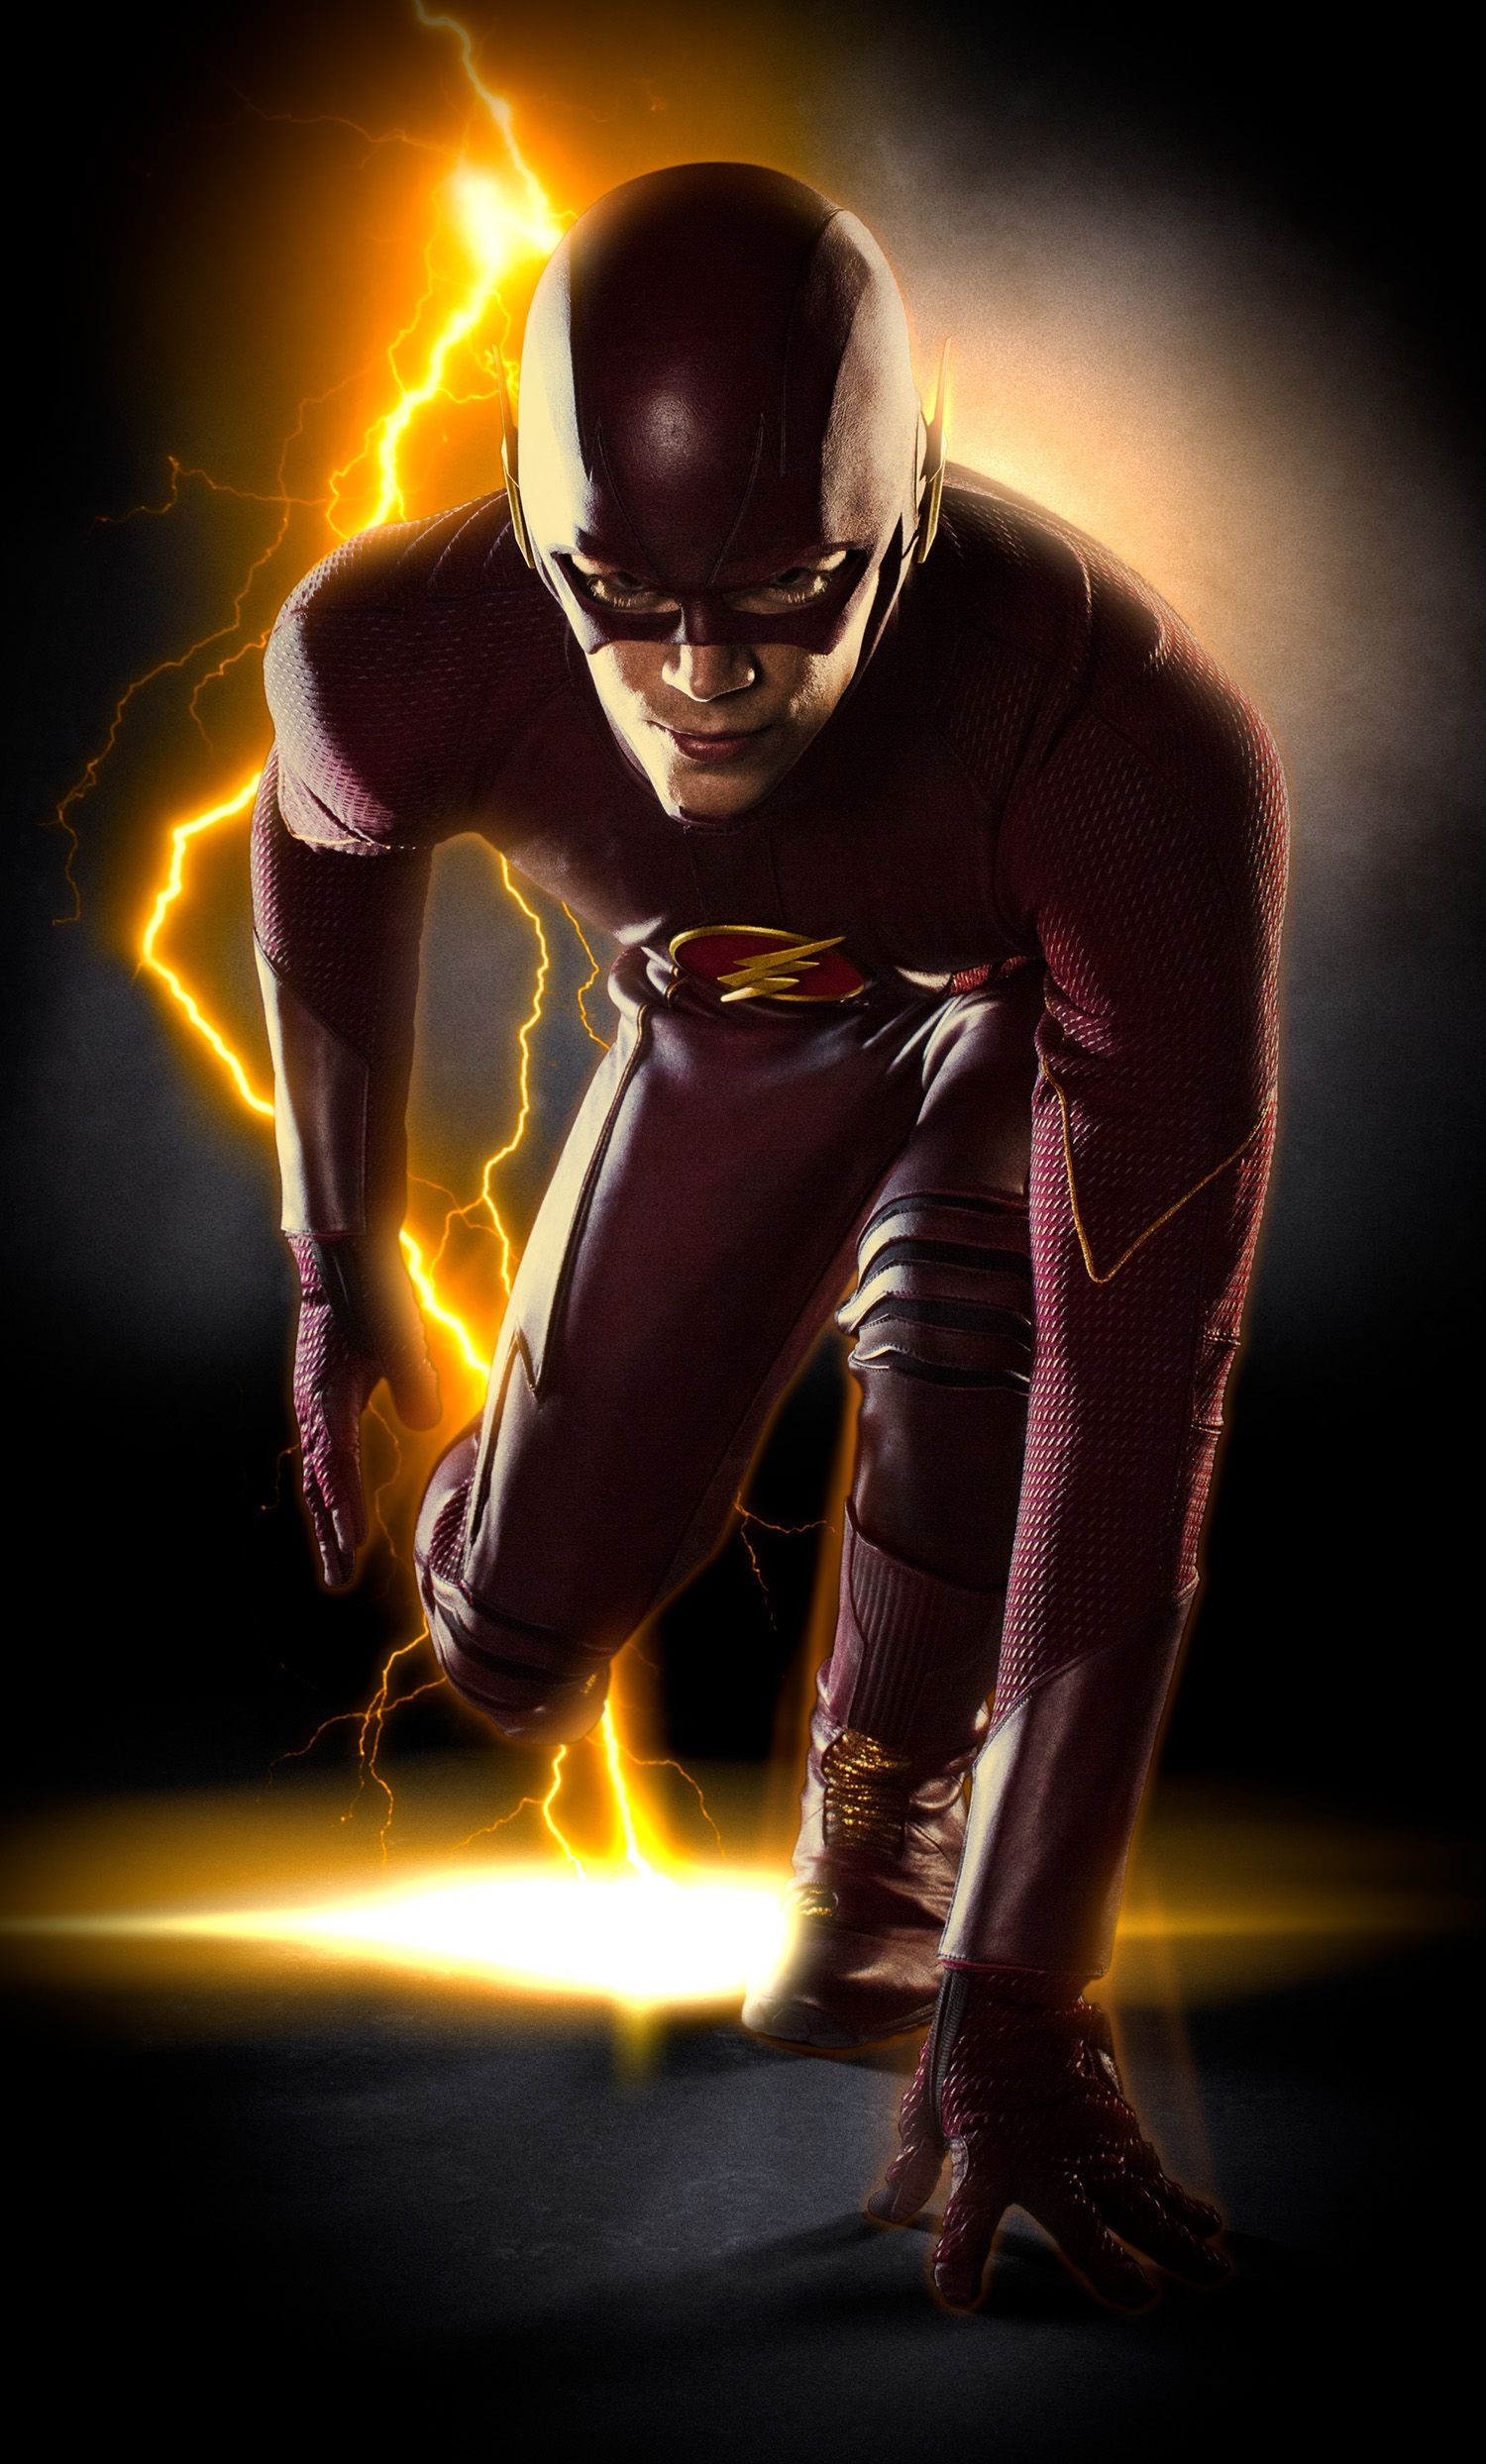 Grant Gustin: The Flash, TV series, An American superhero television series airing on The CW. 1500x2490 HD Wallpaper.